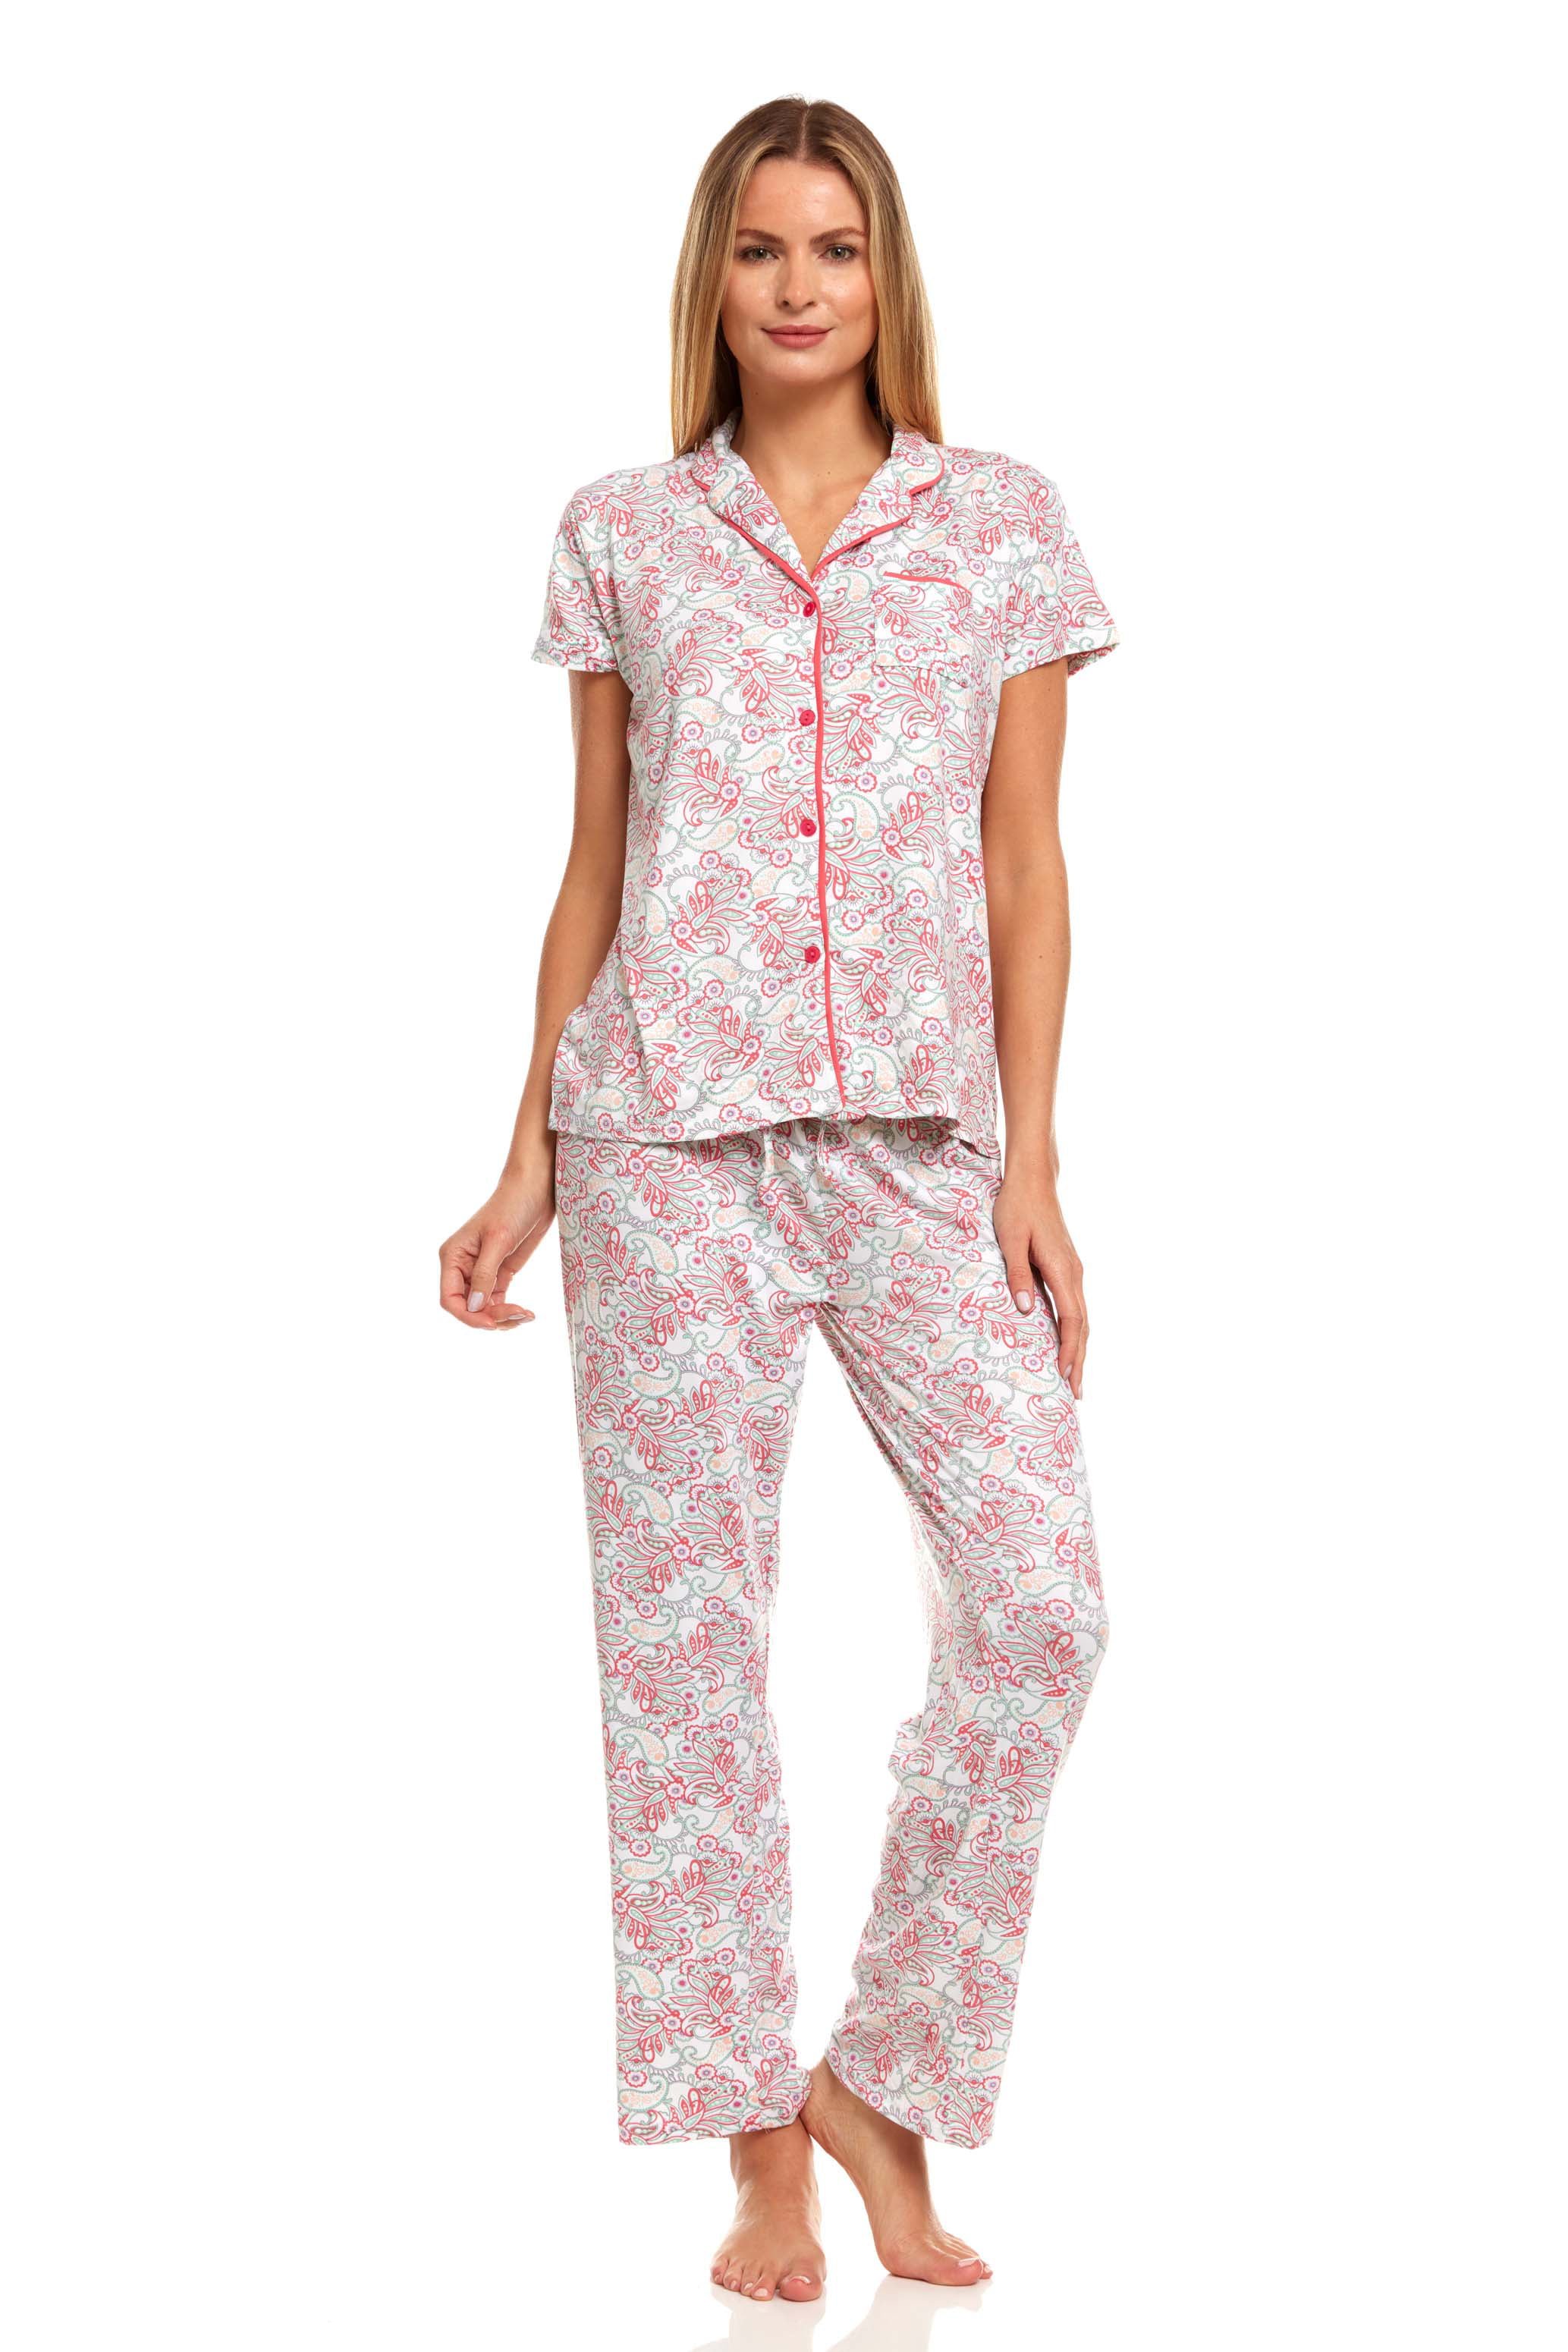 Premiere Fashion - Womens Sleepwear Pajamas Set Woman Short Sleeve